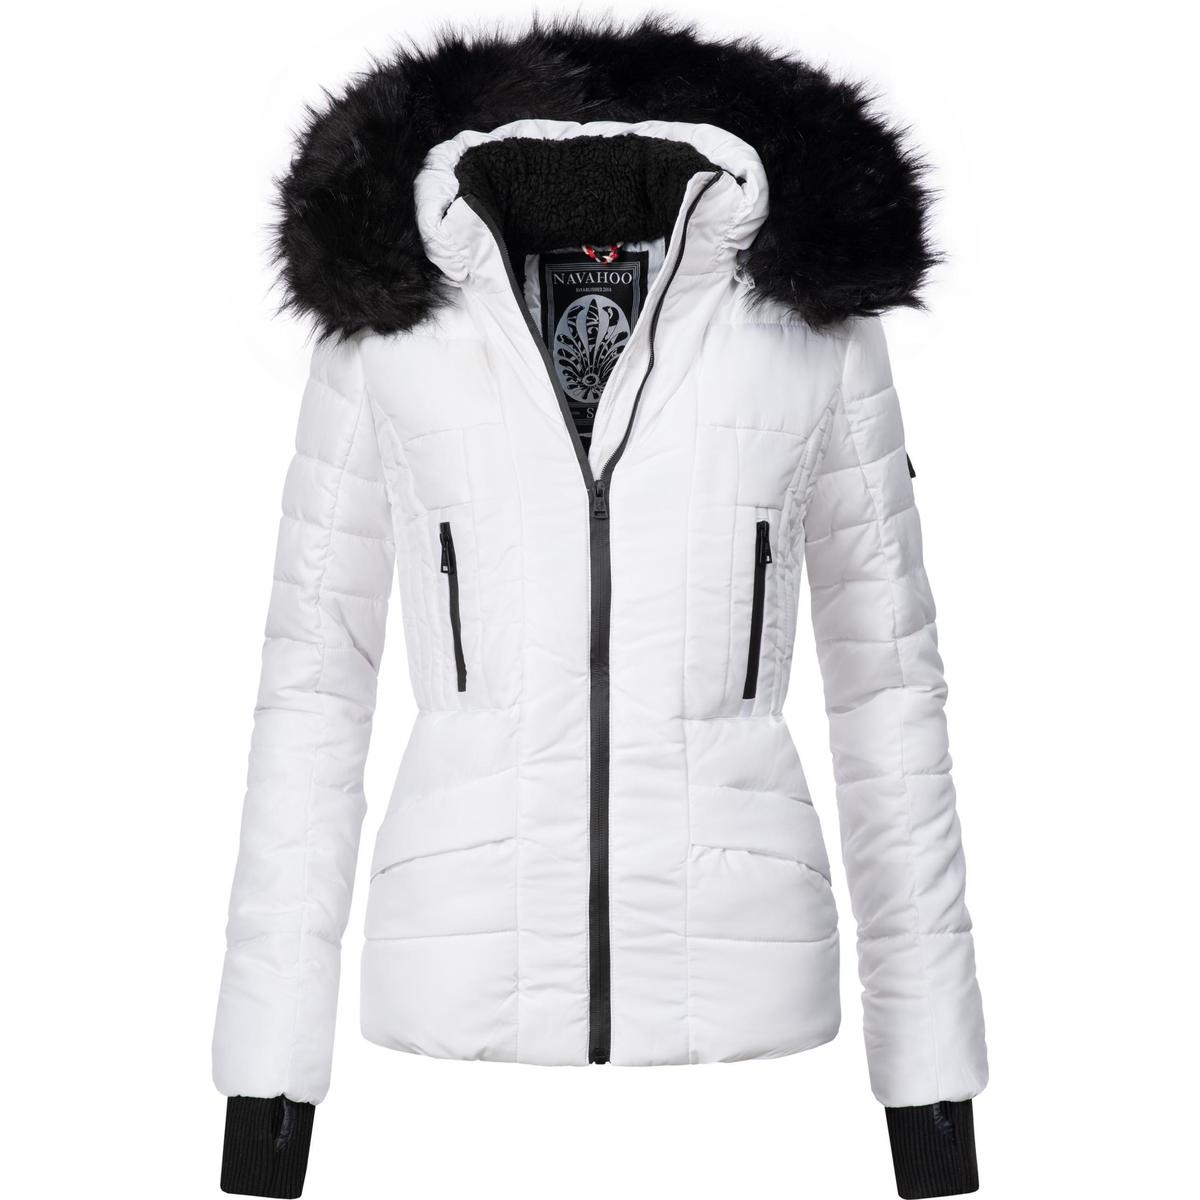 Navahoo Winterjacke Adele Weiss - Kleidung Jacken Damen 119,95 €